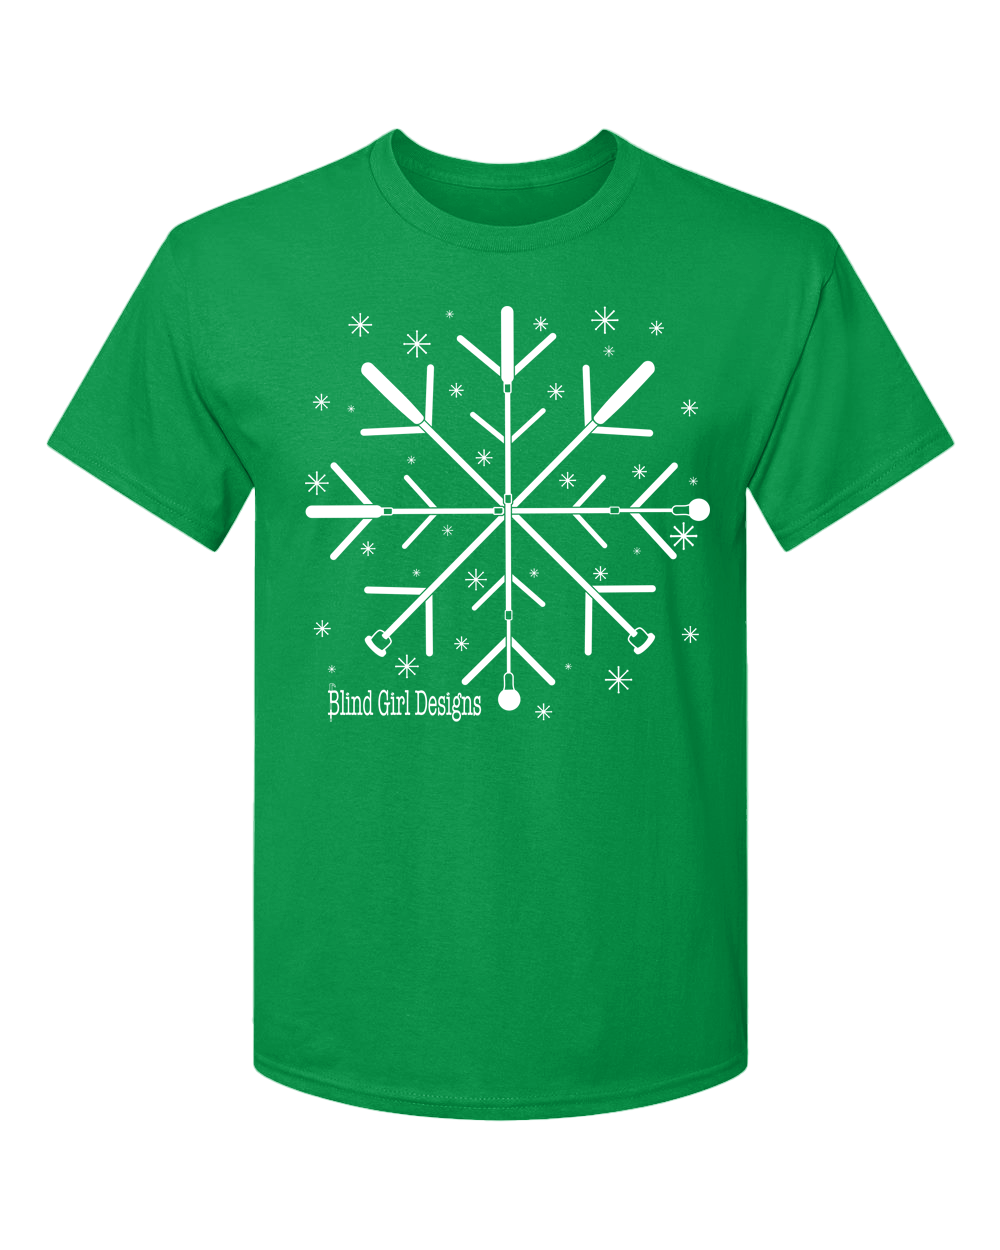 New! 3D Tactile White Cane Snowflake T-Shirt - Irish green